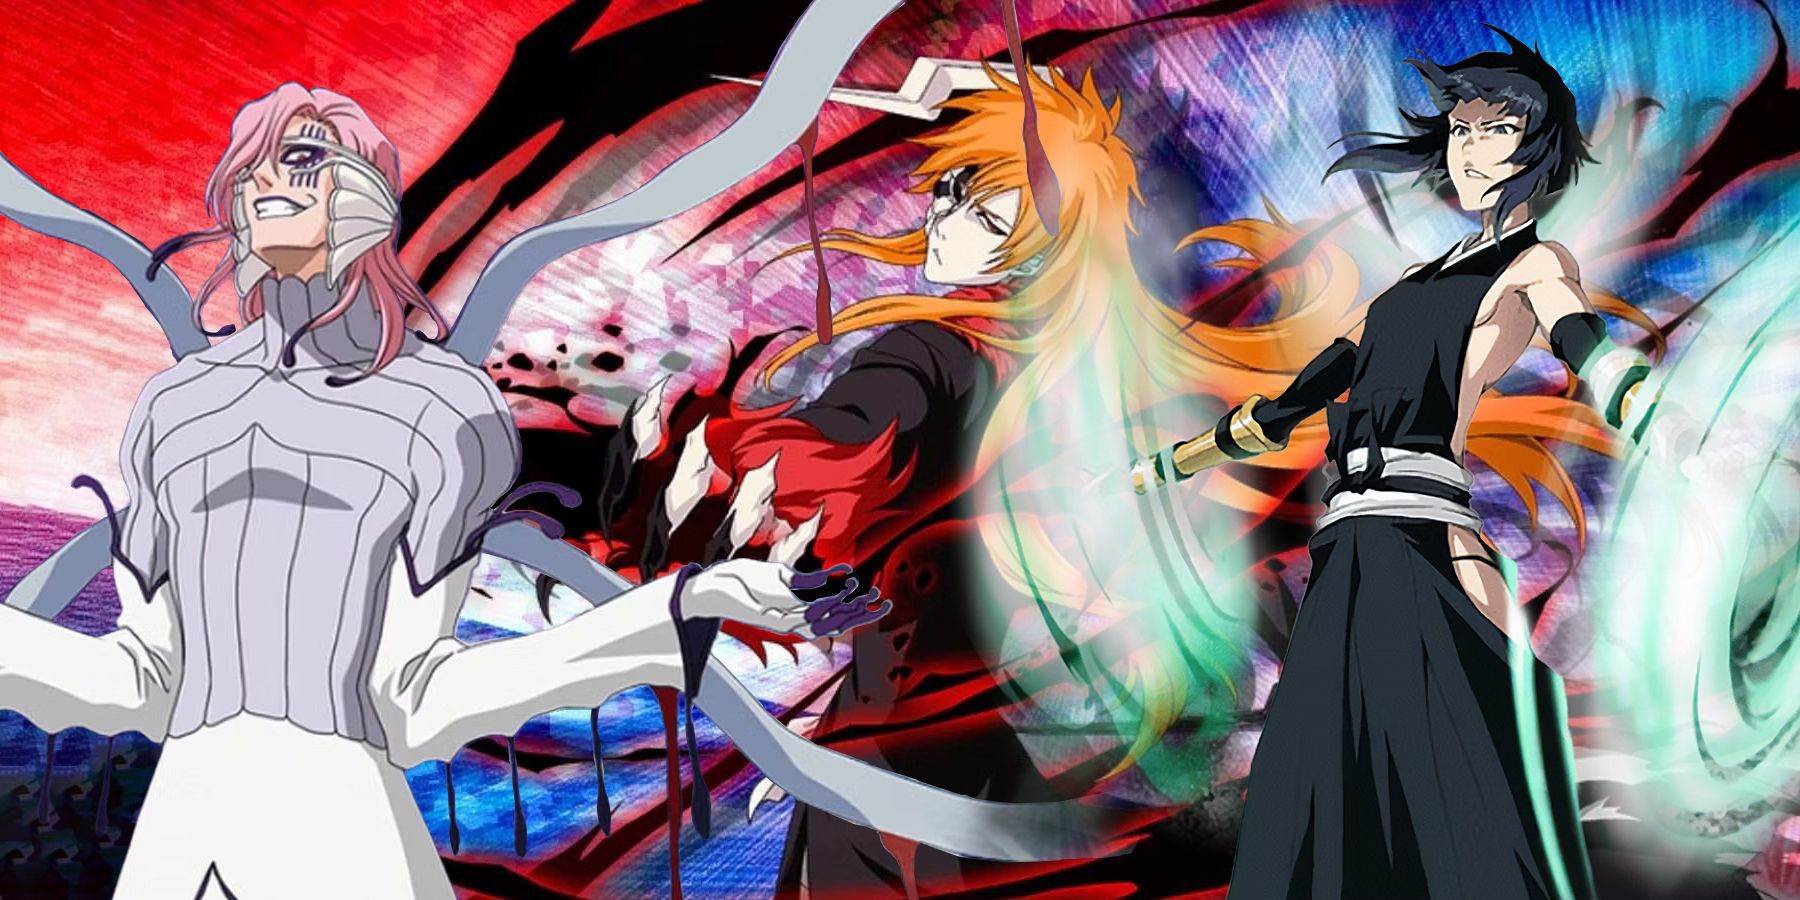 Anime Game Mini Review / Bleach: Soul Resurreccion